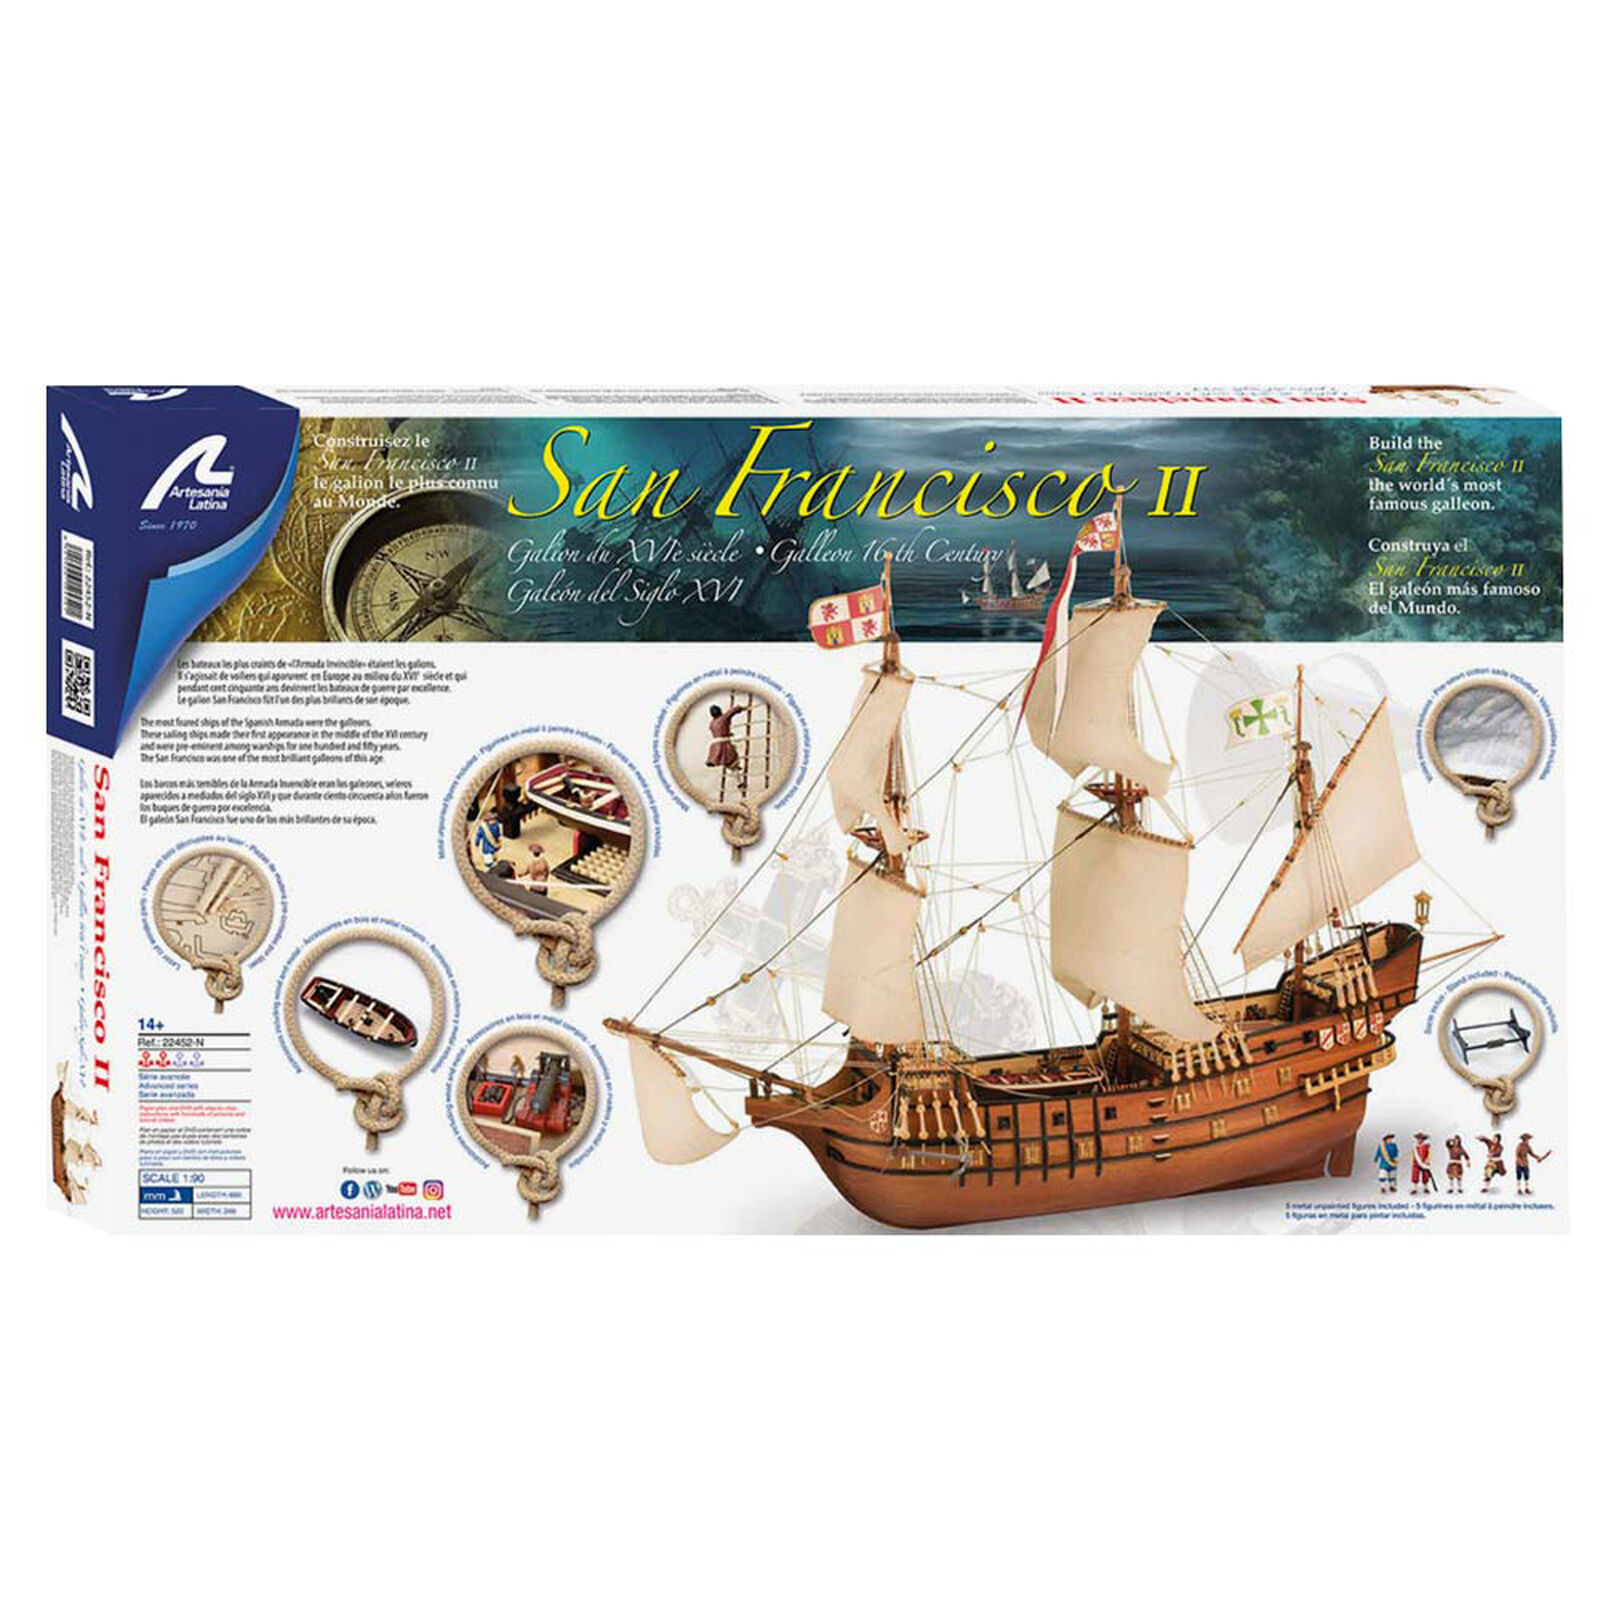 Artesania Latina Model Boat Kits - US Premier ship Models